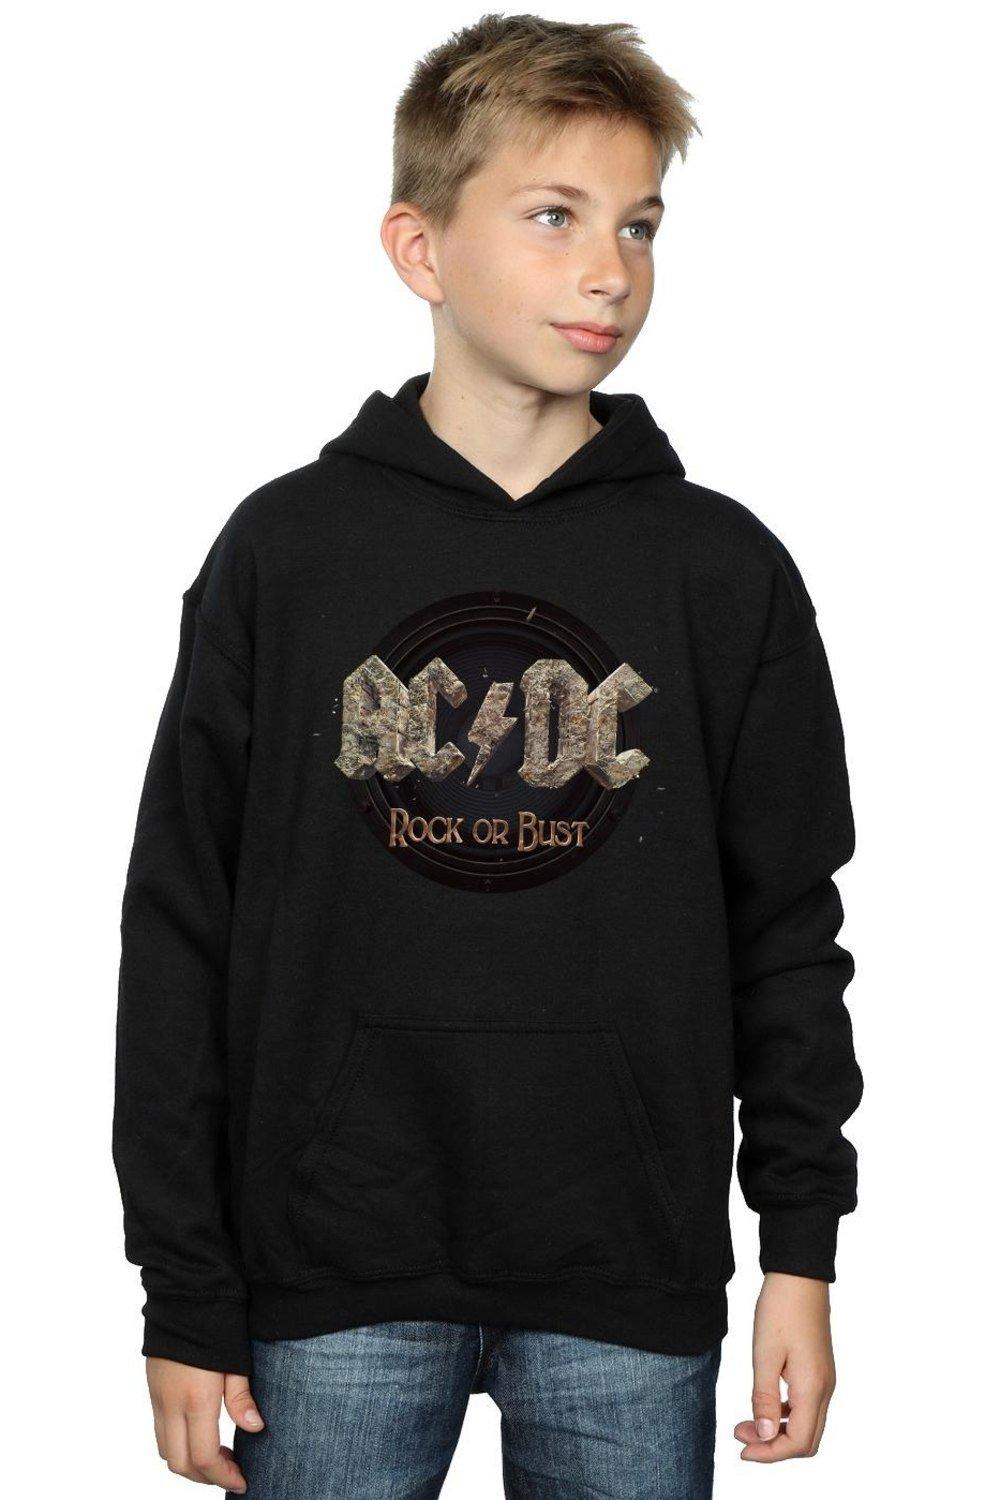 ac dc rock or bust Толстовка Rock Or Bust AC/DC, черный